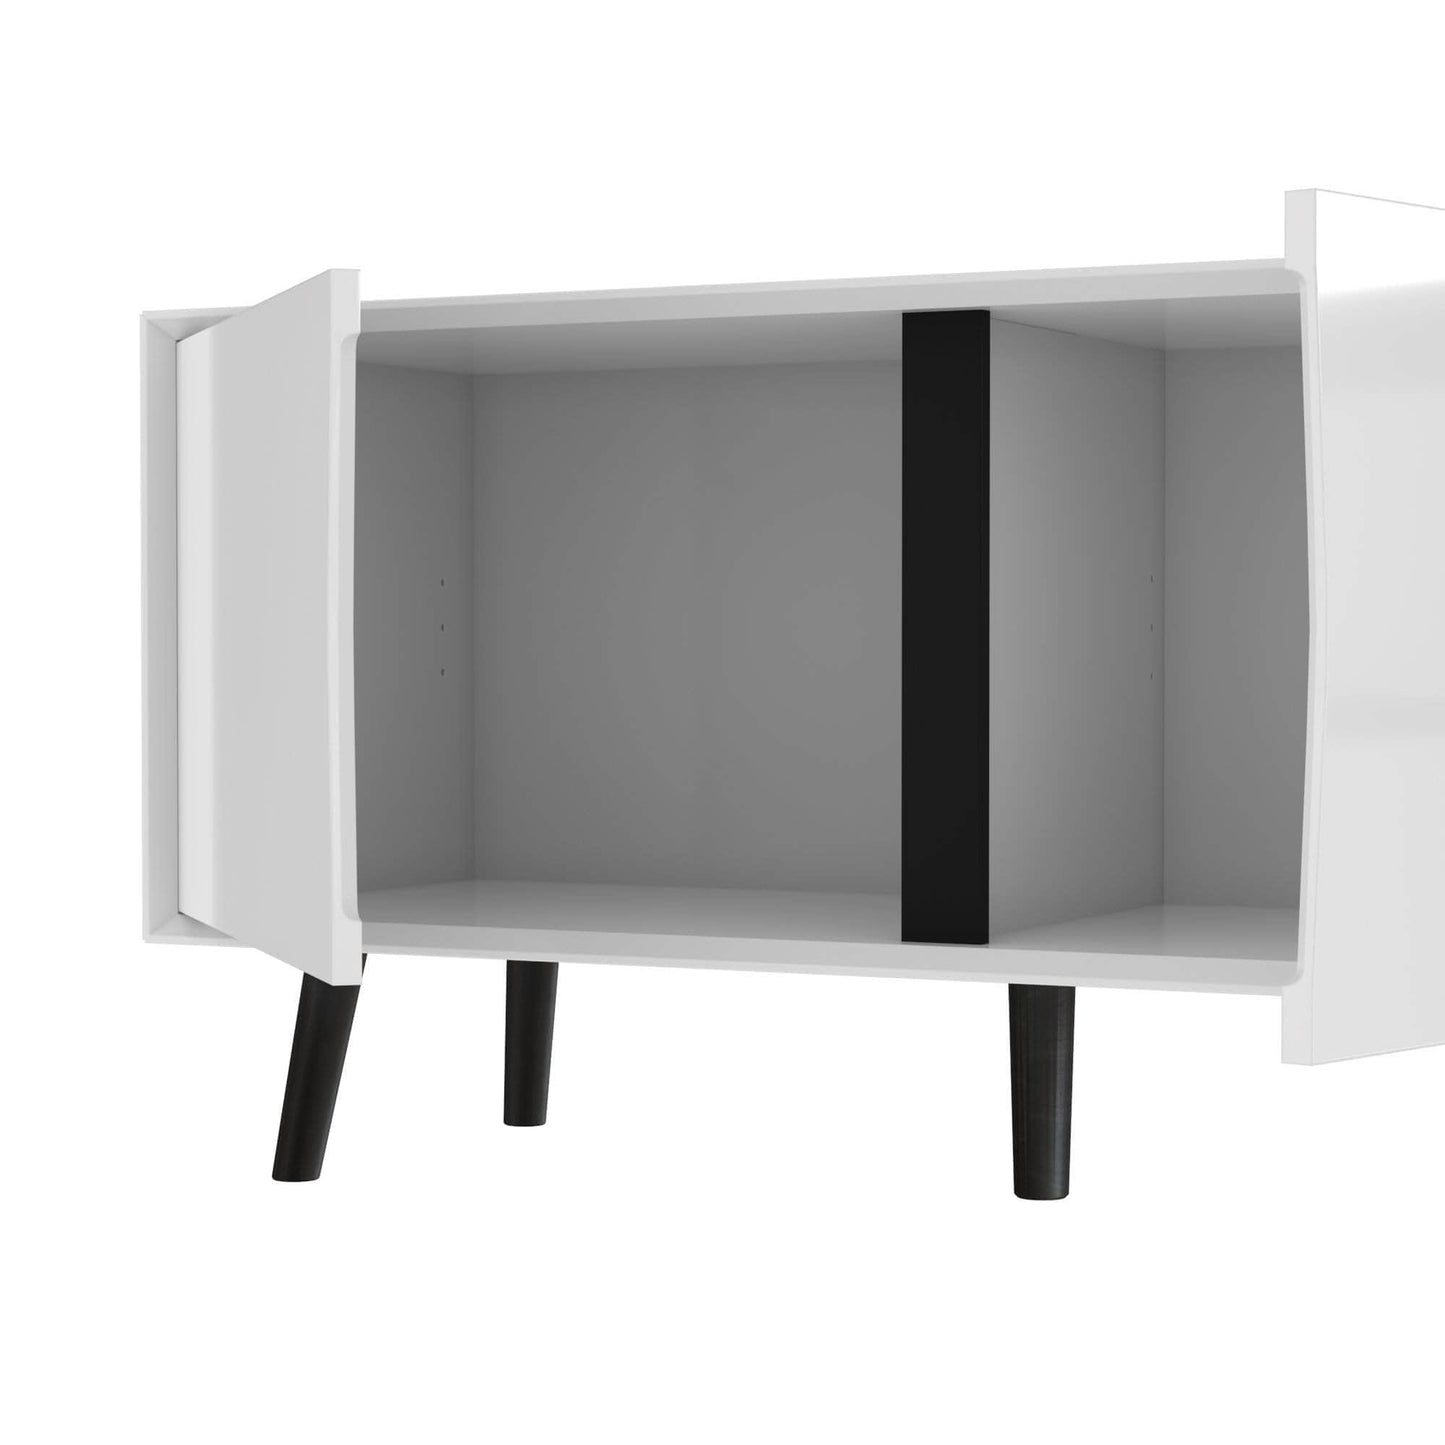 Modubox TV Stand White Maia TV Stand - White